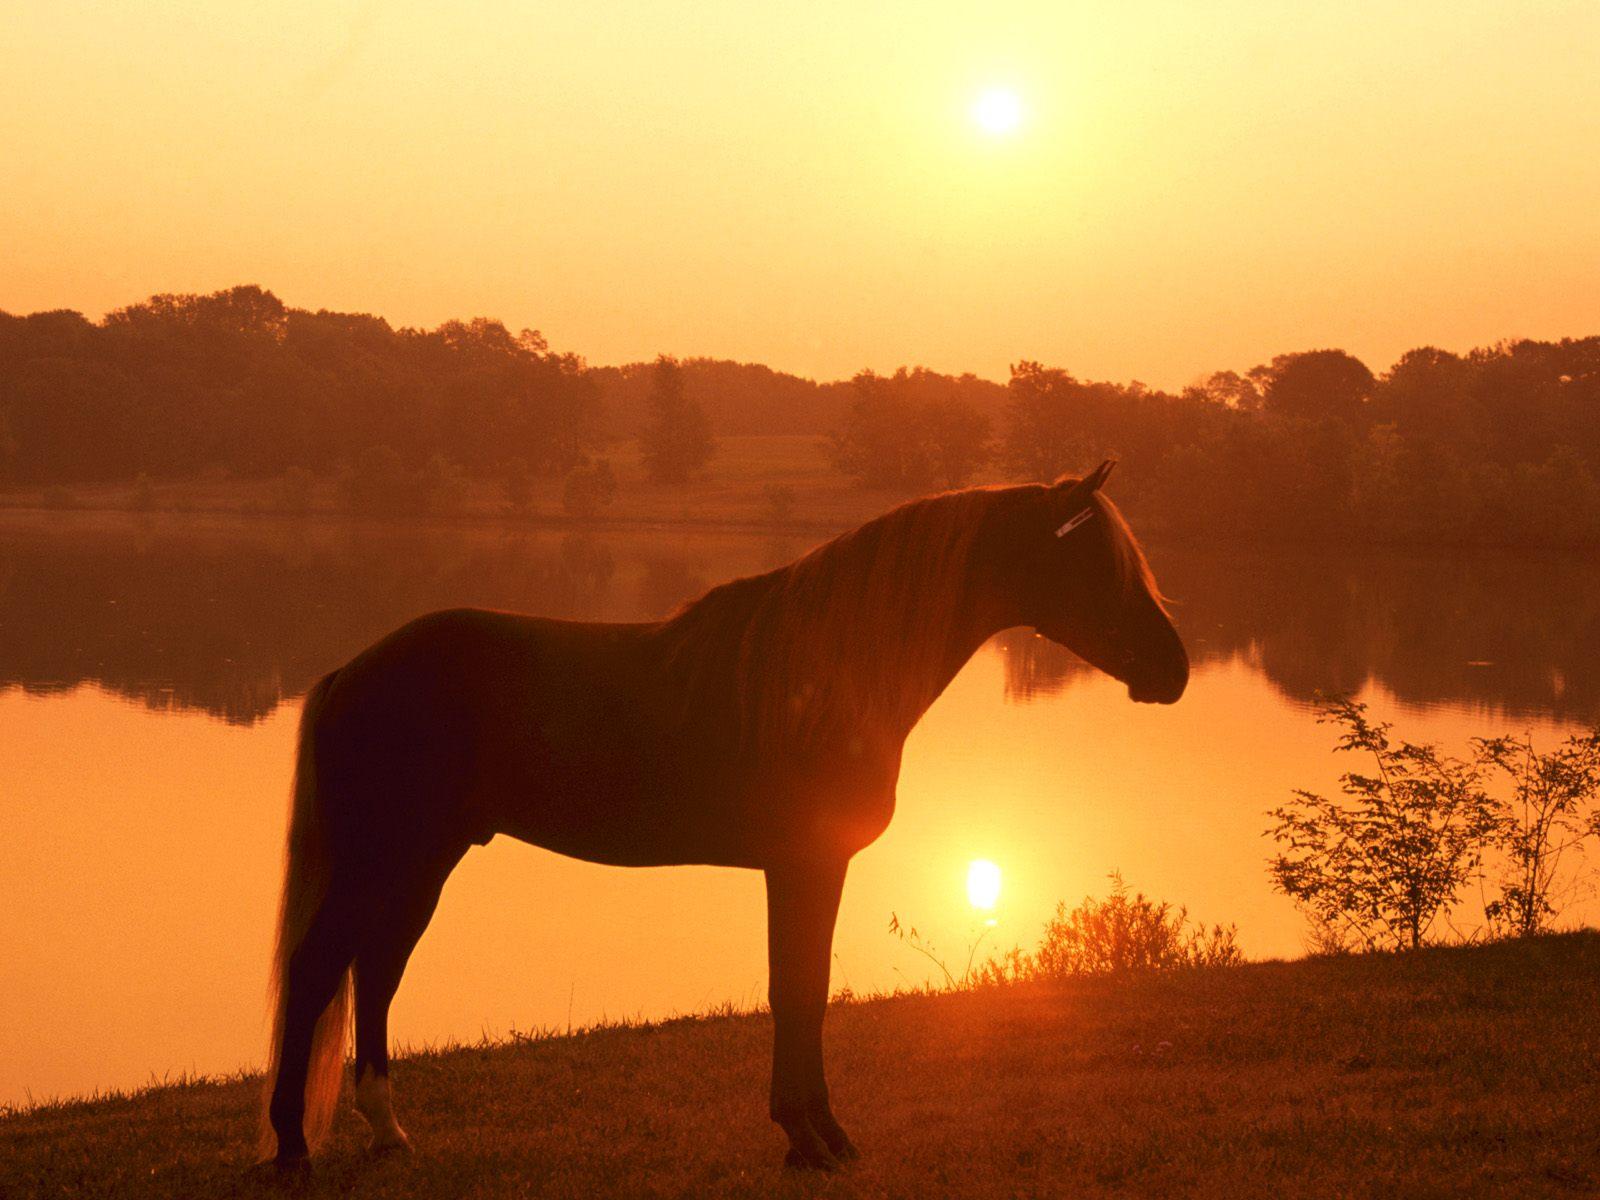 Rocky mountain horse free desktop background wallpaper image